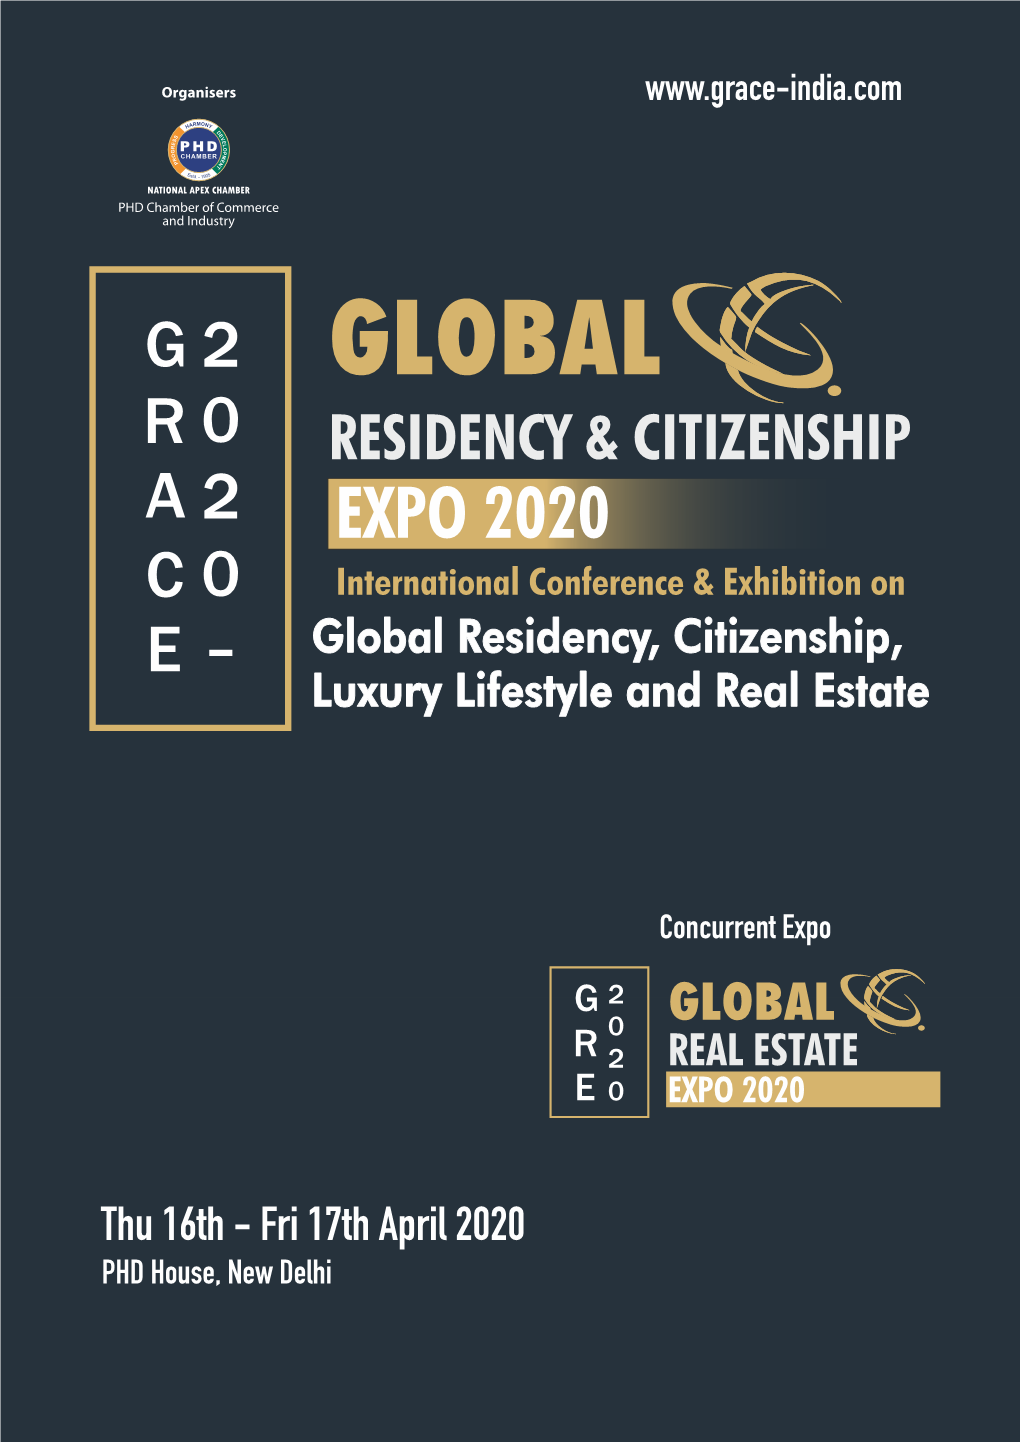 Global Residency & Citizenship Expo 2020